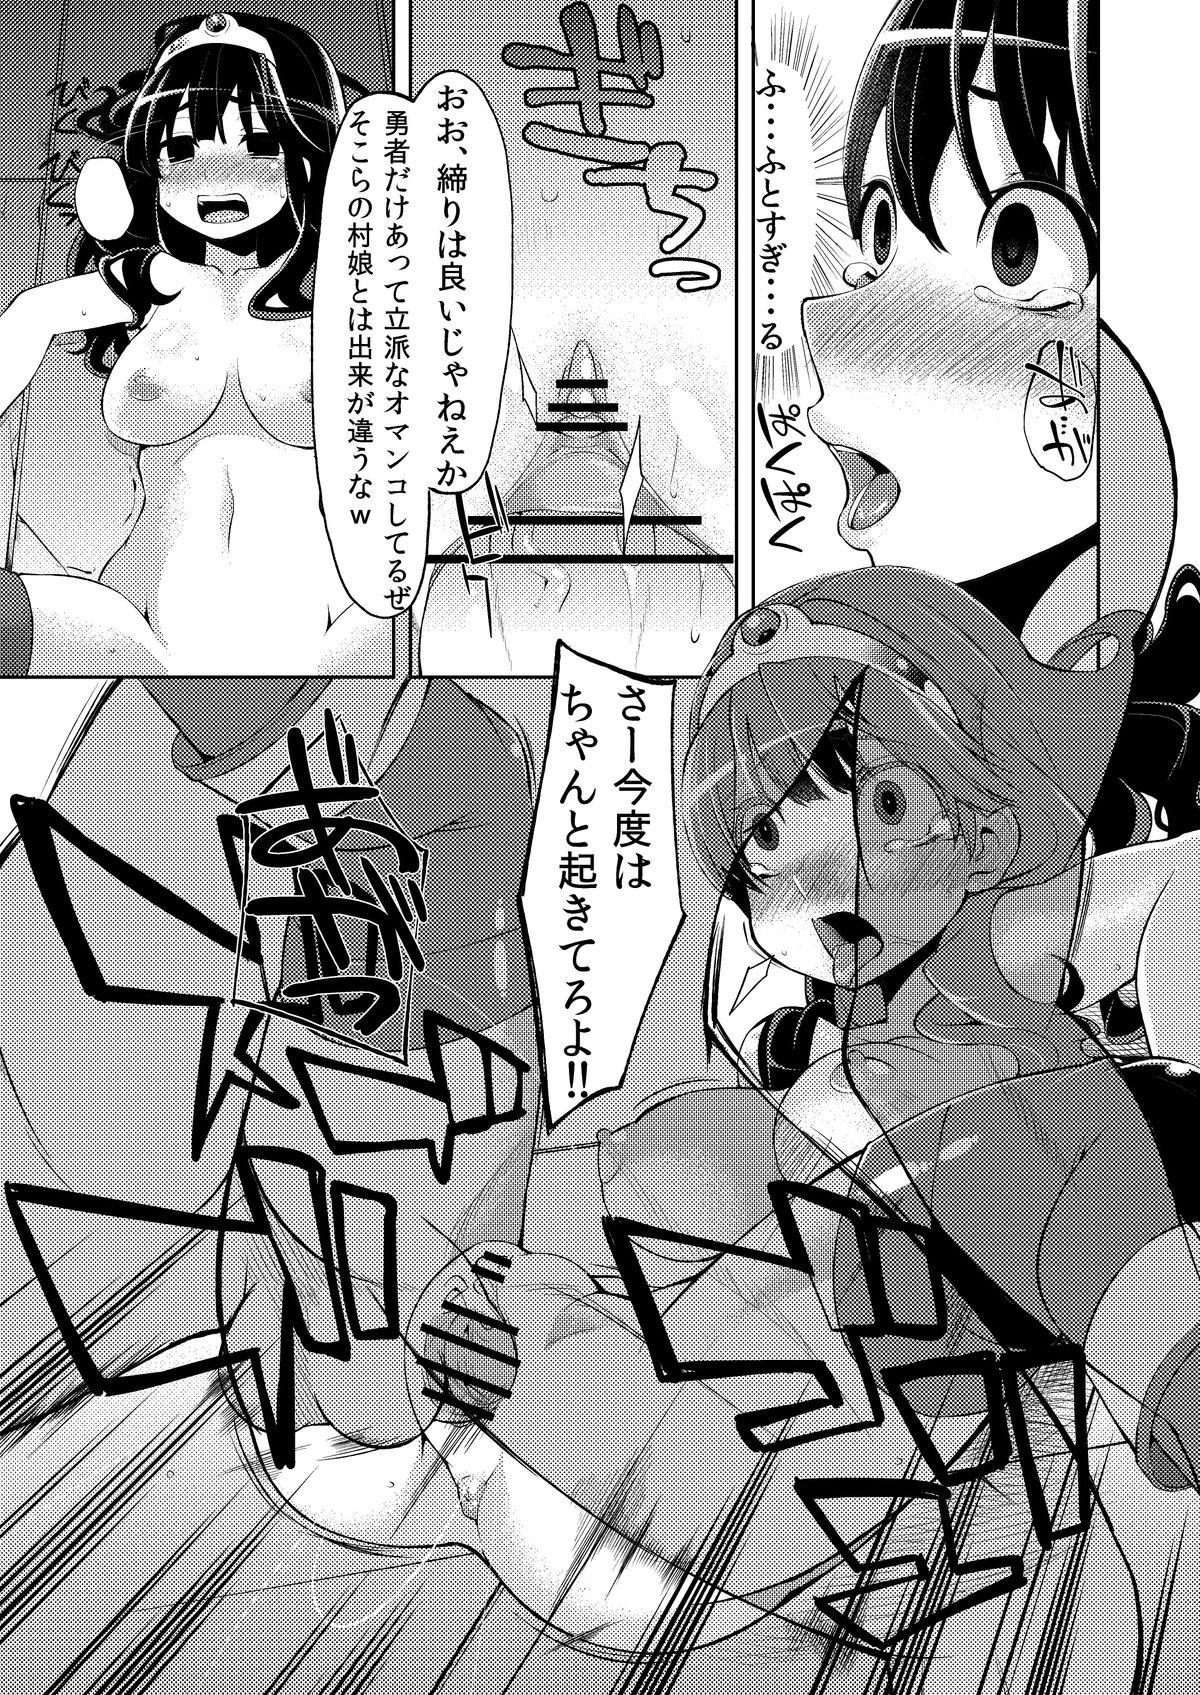 Tits Benmusu Bouken no Sho 3 - Dragon quest Lover - Page 10